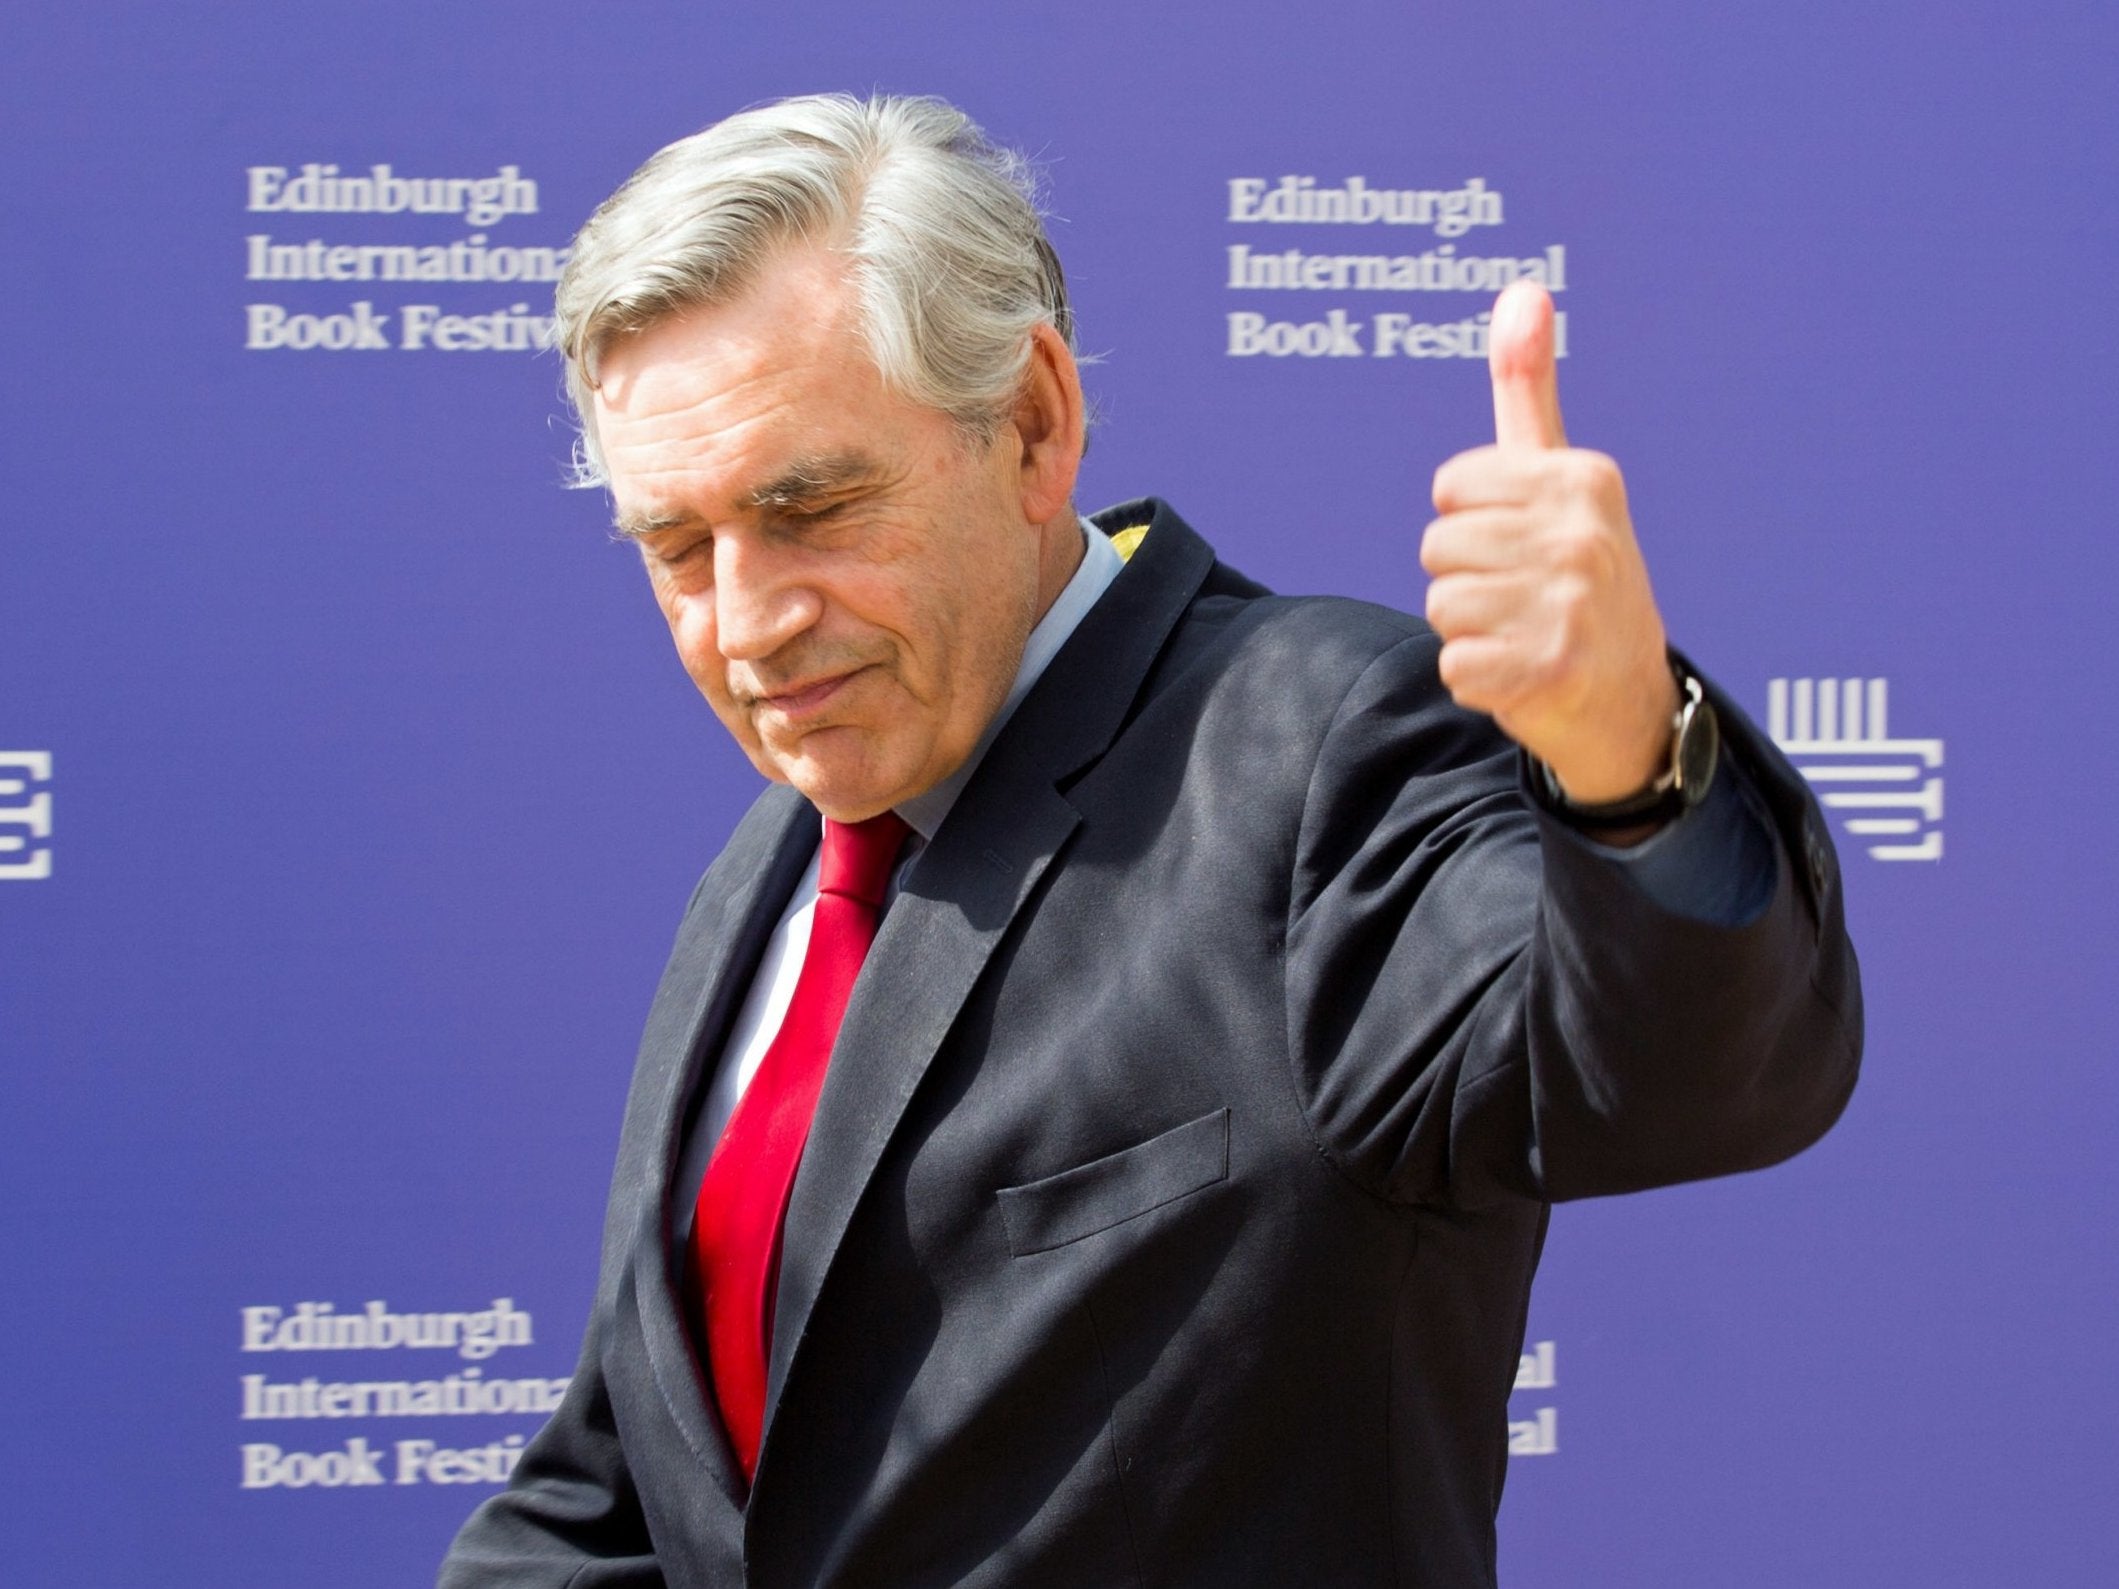 Former prime minister Gordon Brown appearing at the Edinburgh International Book Festival